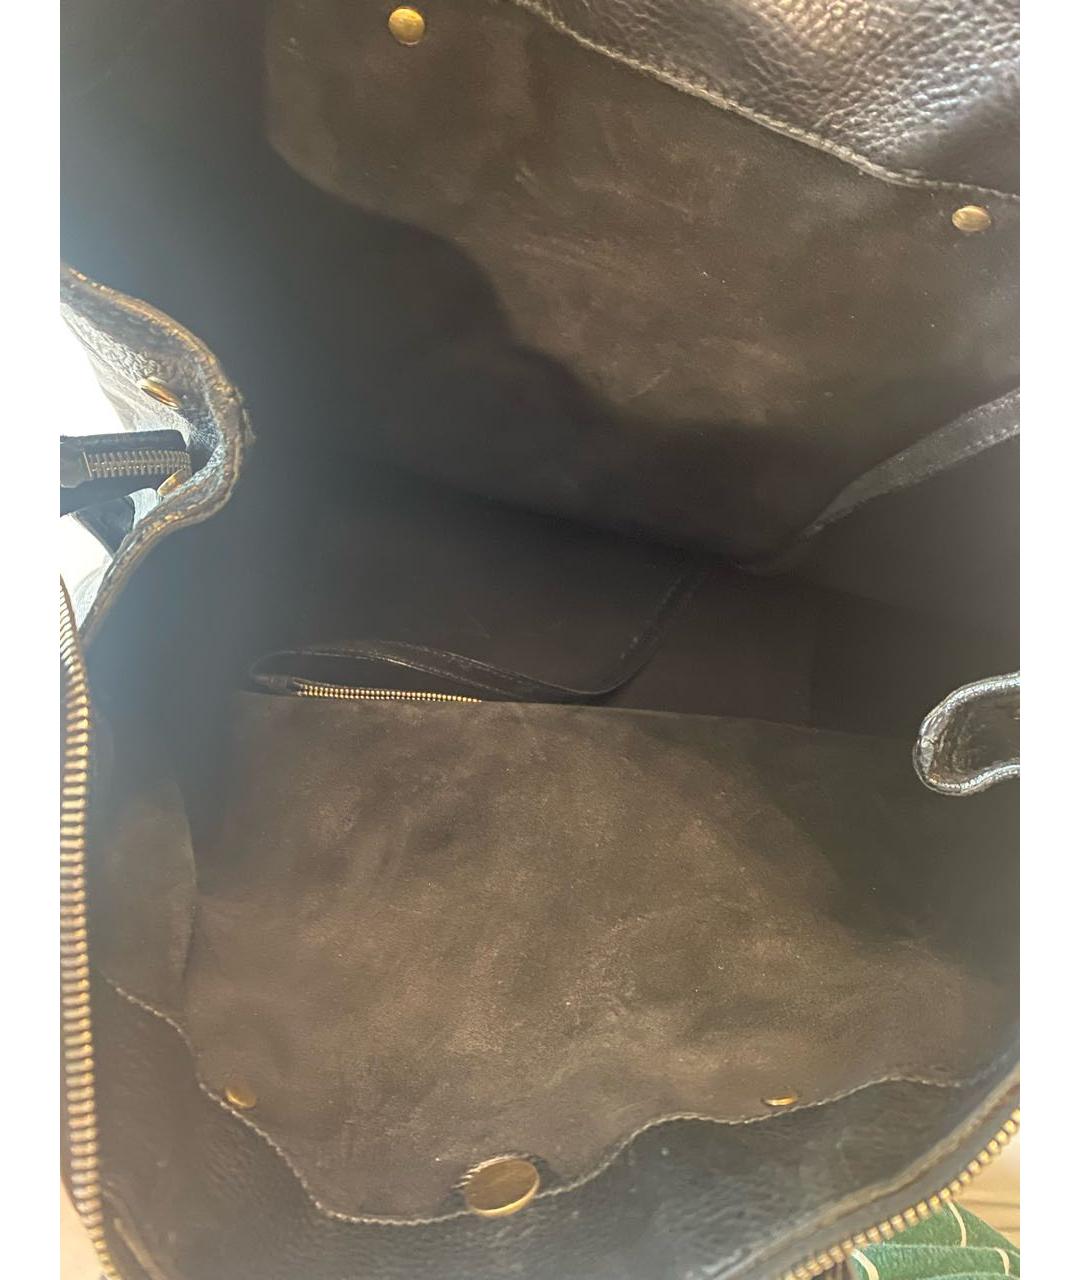 SAINT LAURENT Черная кожаная сумка с короткими ручками, фото 5